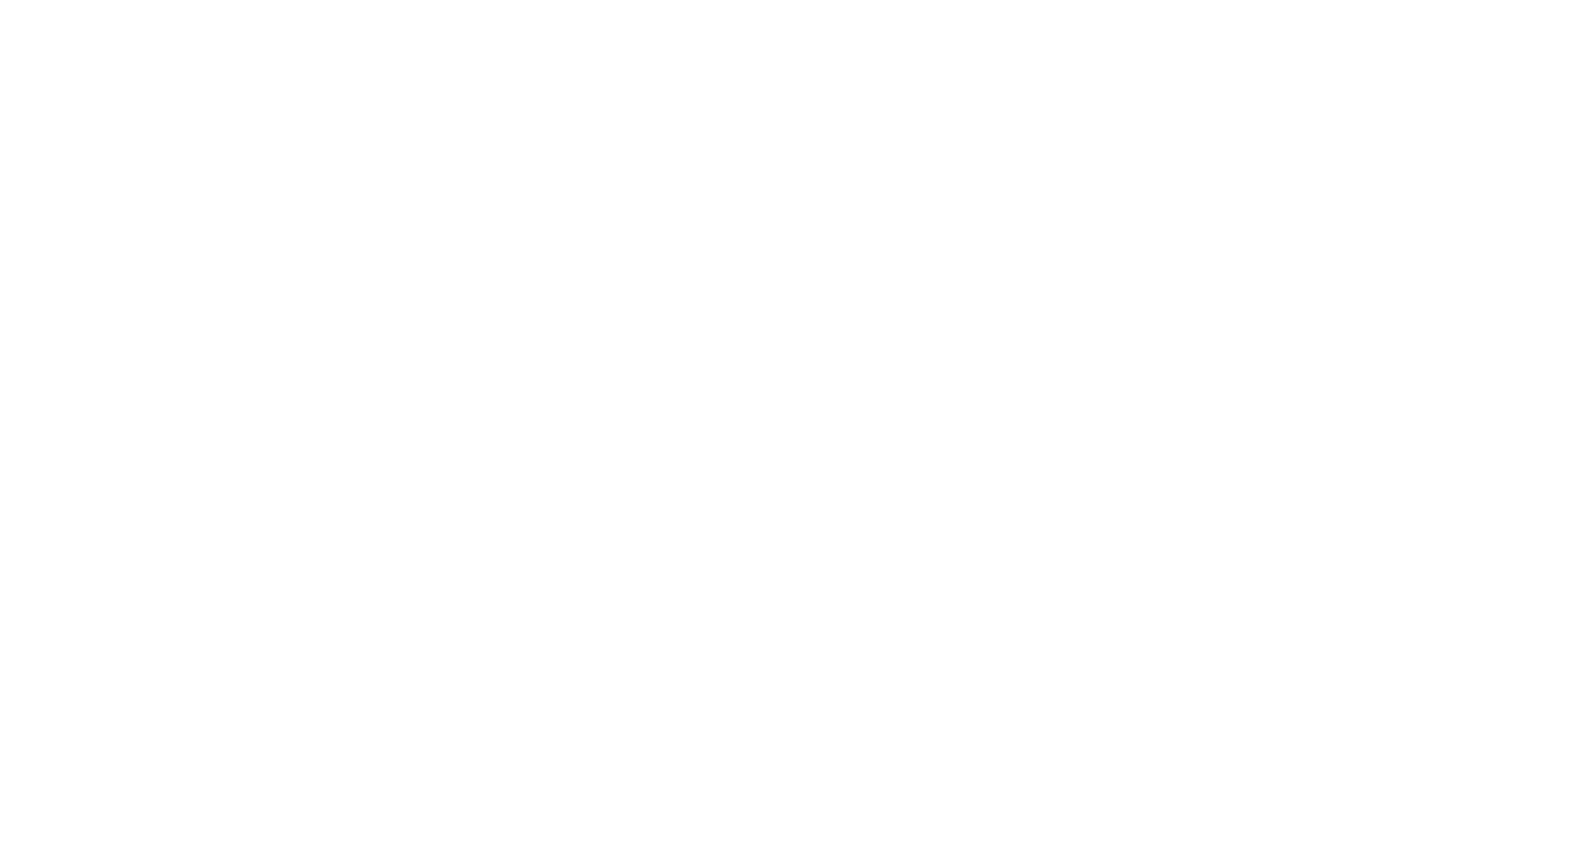 Parallel Logo - EMA Logos Early Music America